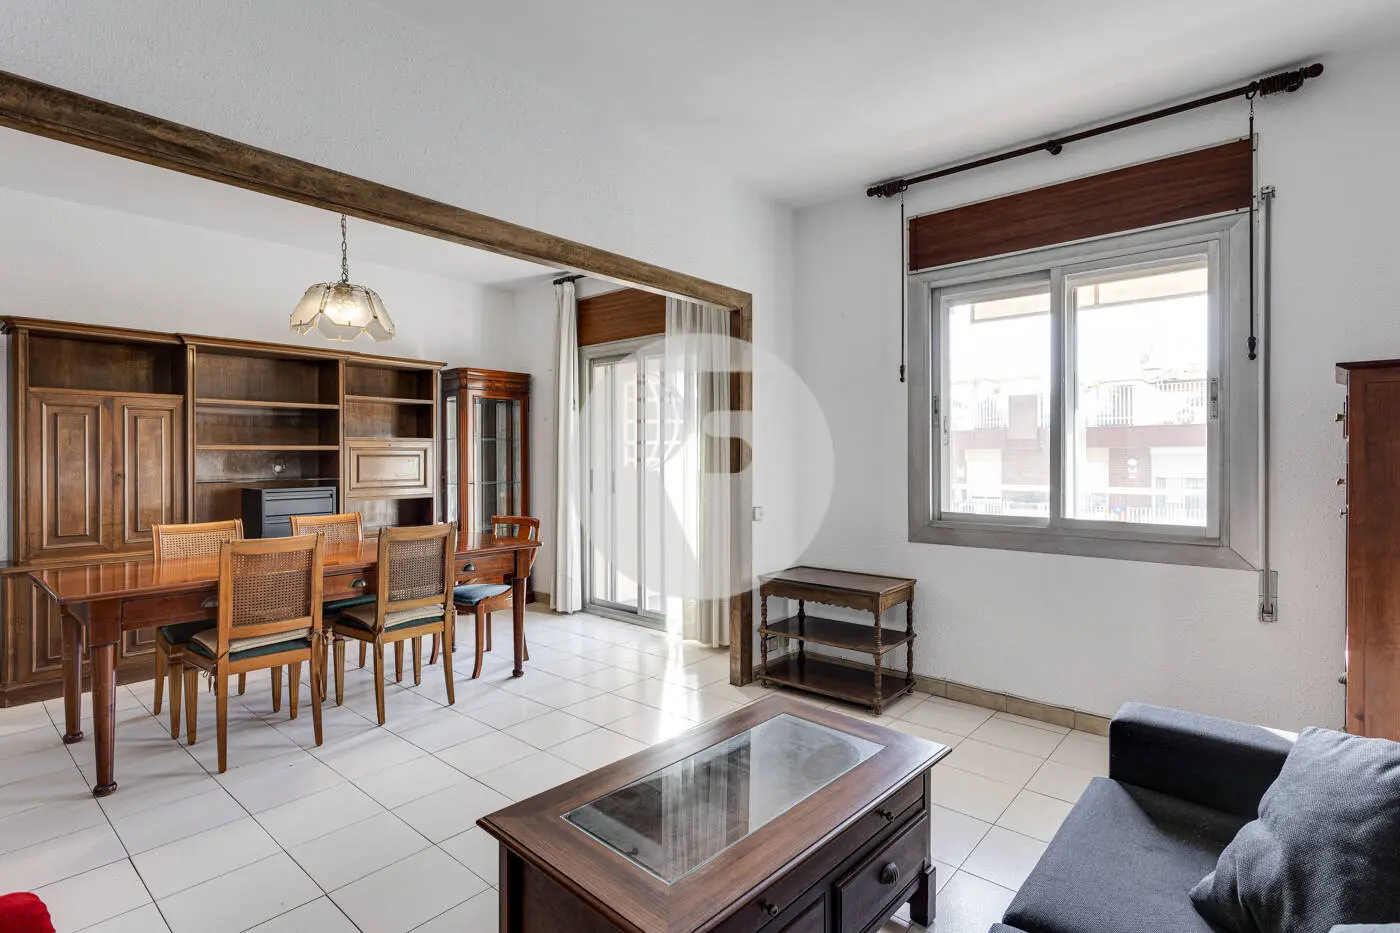 3-bedroom apartment located in the Nova Esquerra de l'Eixample neighborhood of Barcelona. 2